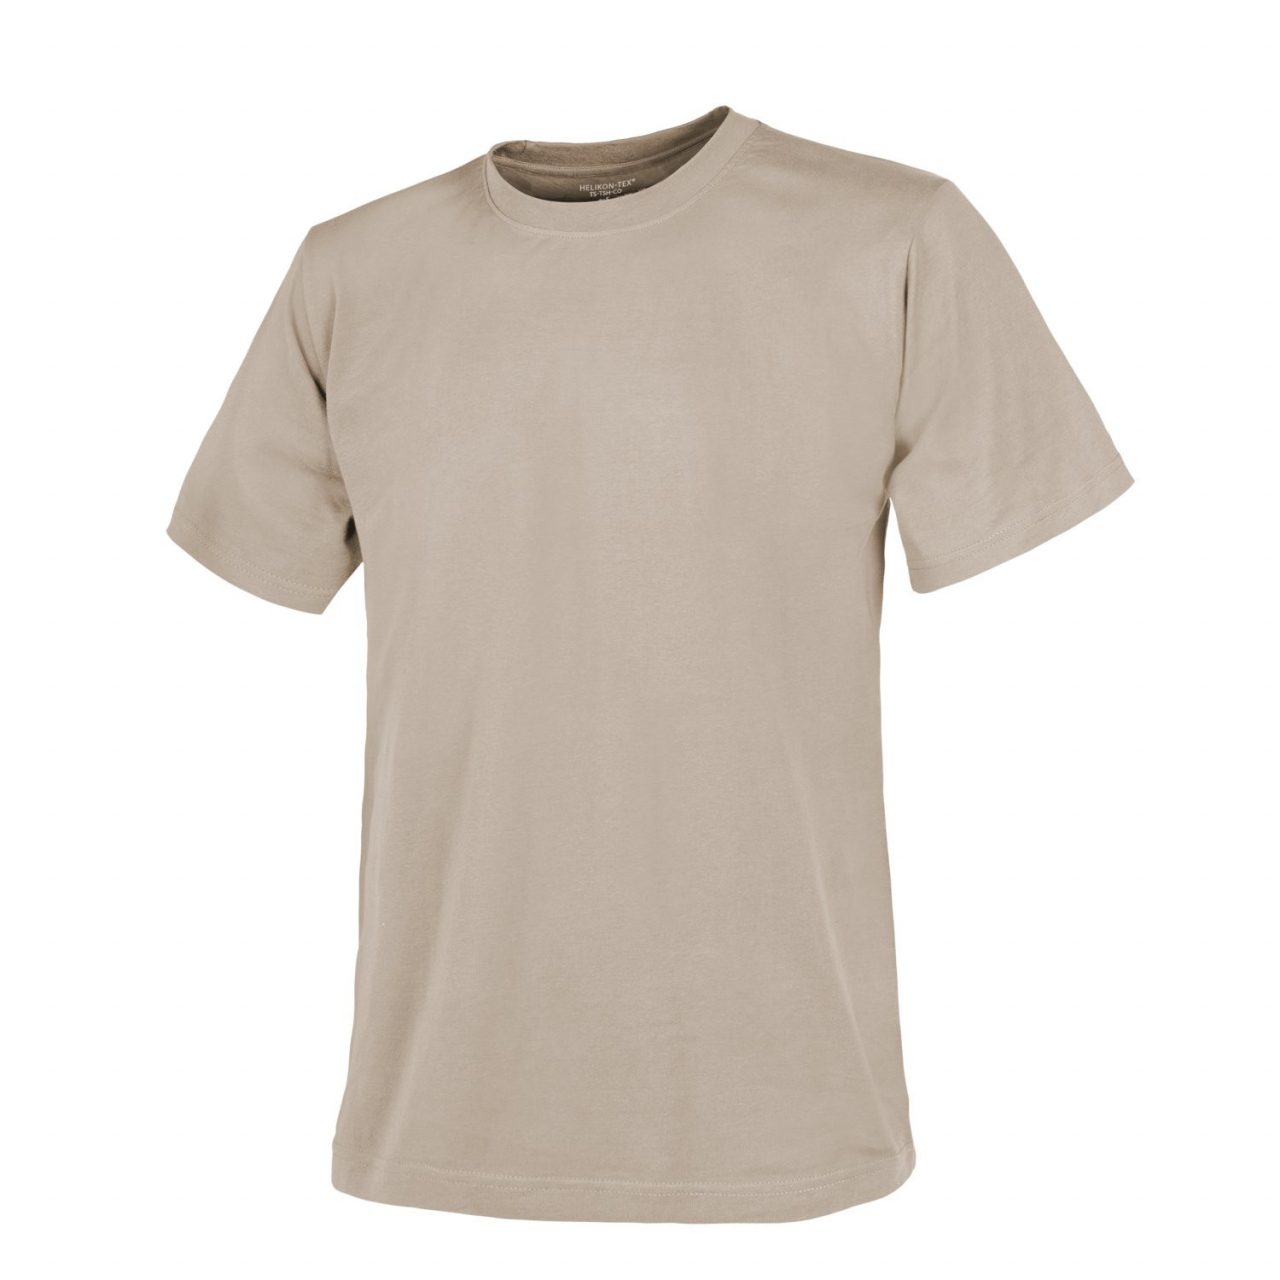 Tričko Helikon Classic Army - béžové, XL